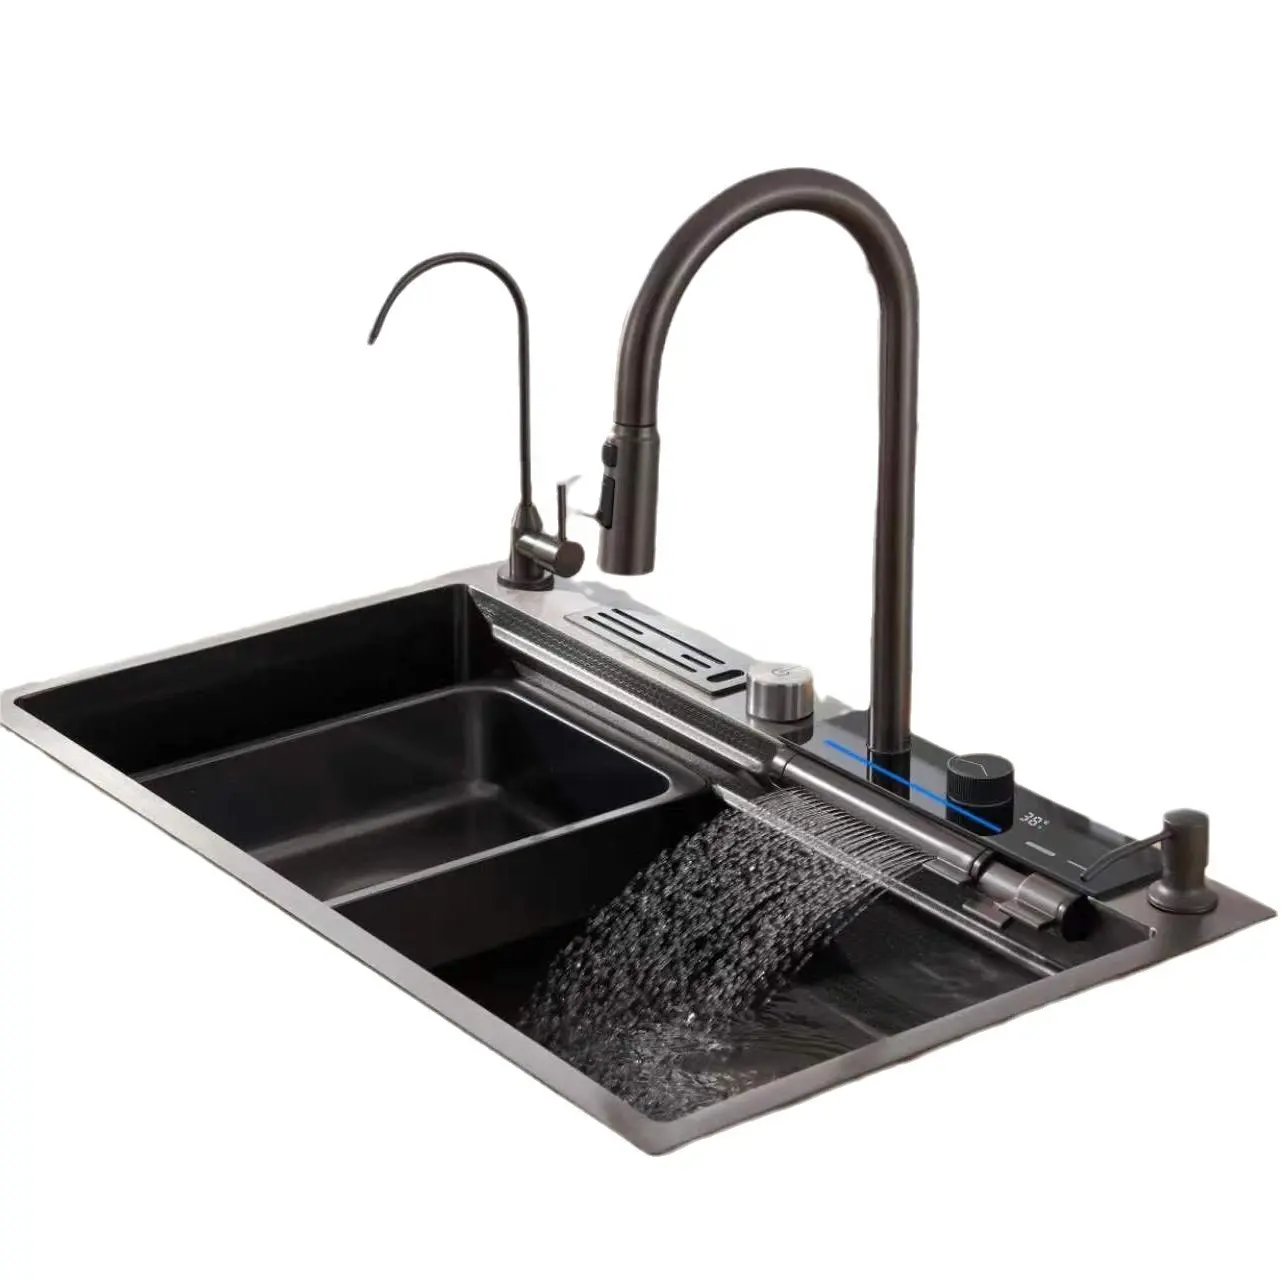 2023New design kitchen sinks multifunction black waterfall rainfall single bowl kitchen sink stainless steel kitchen sink set